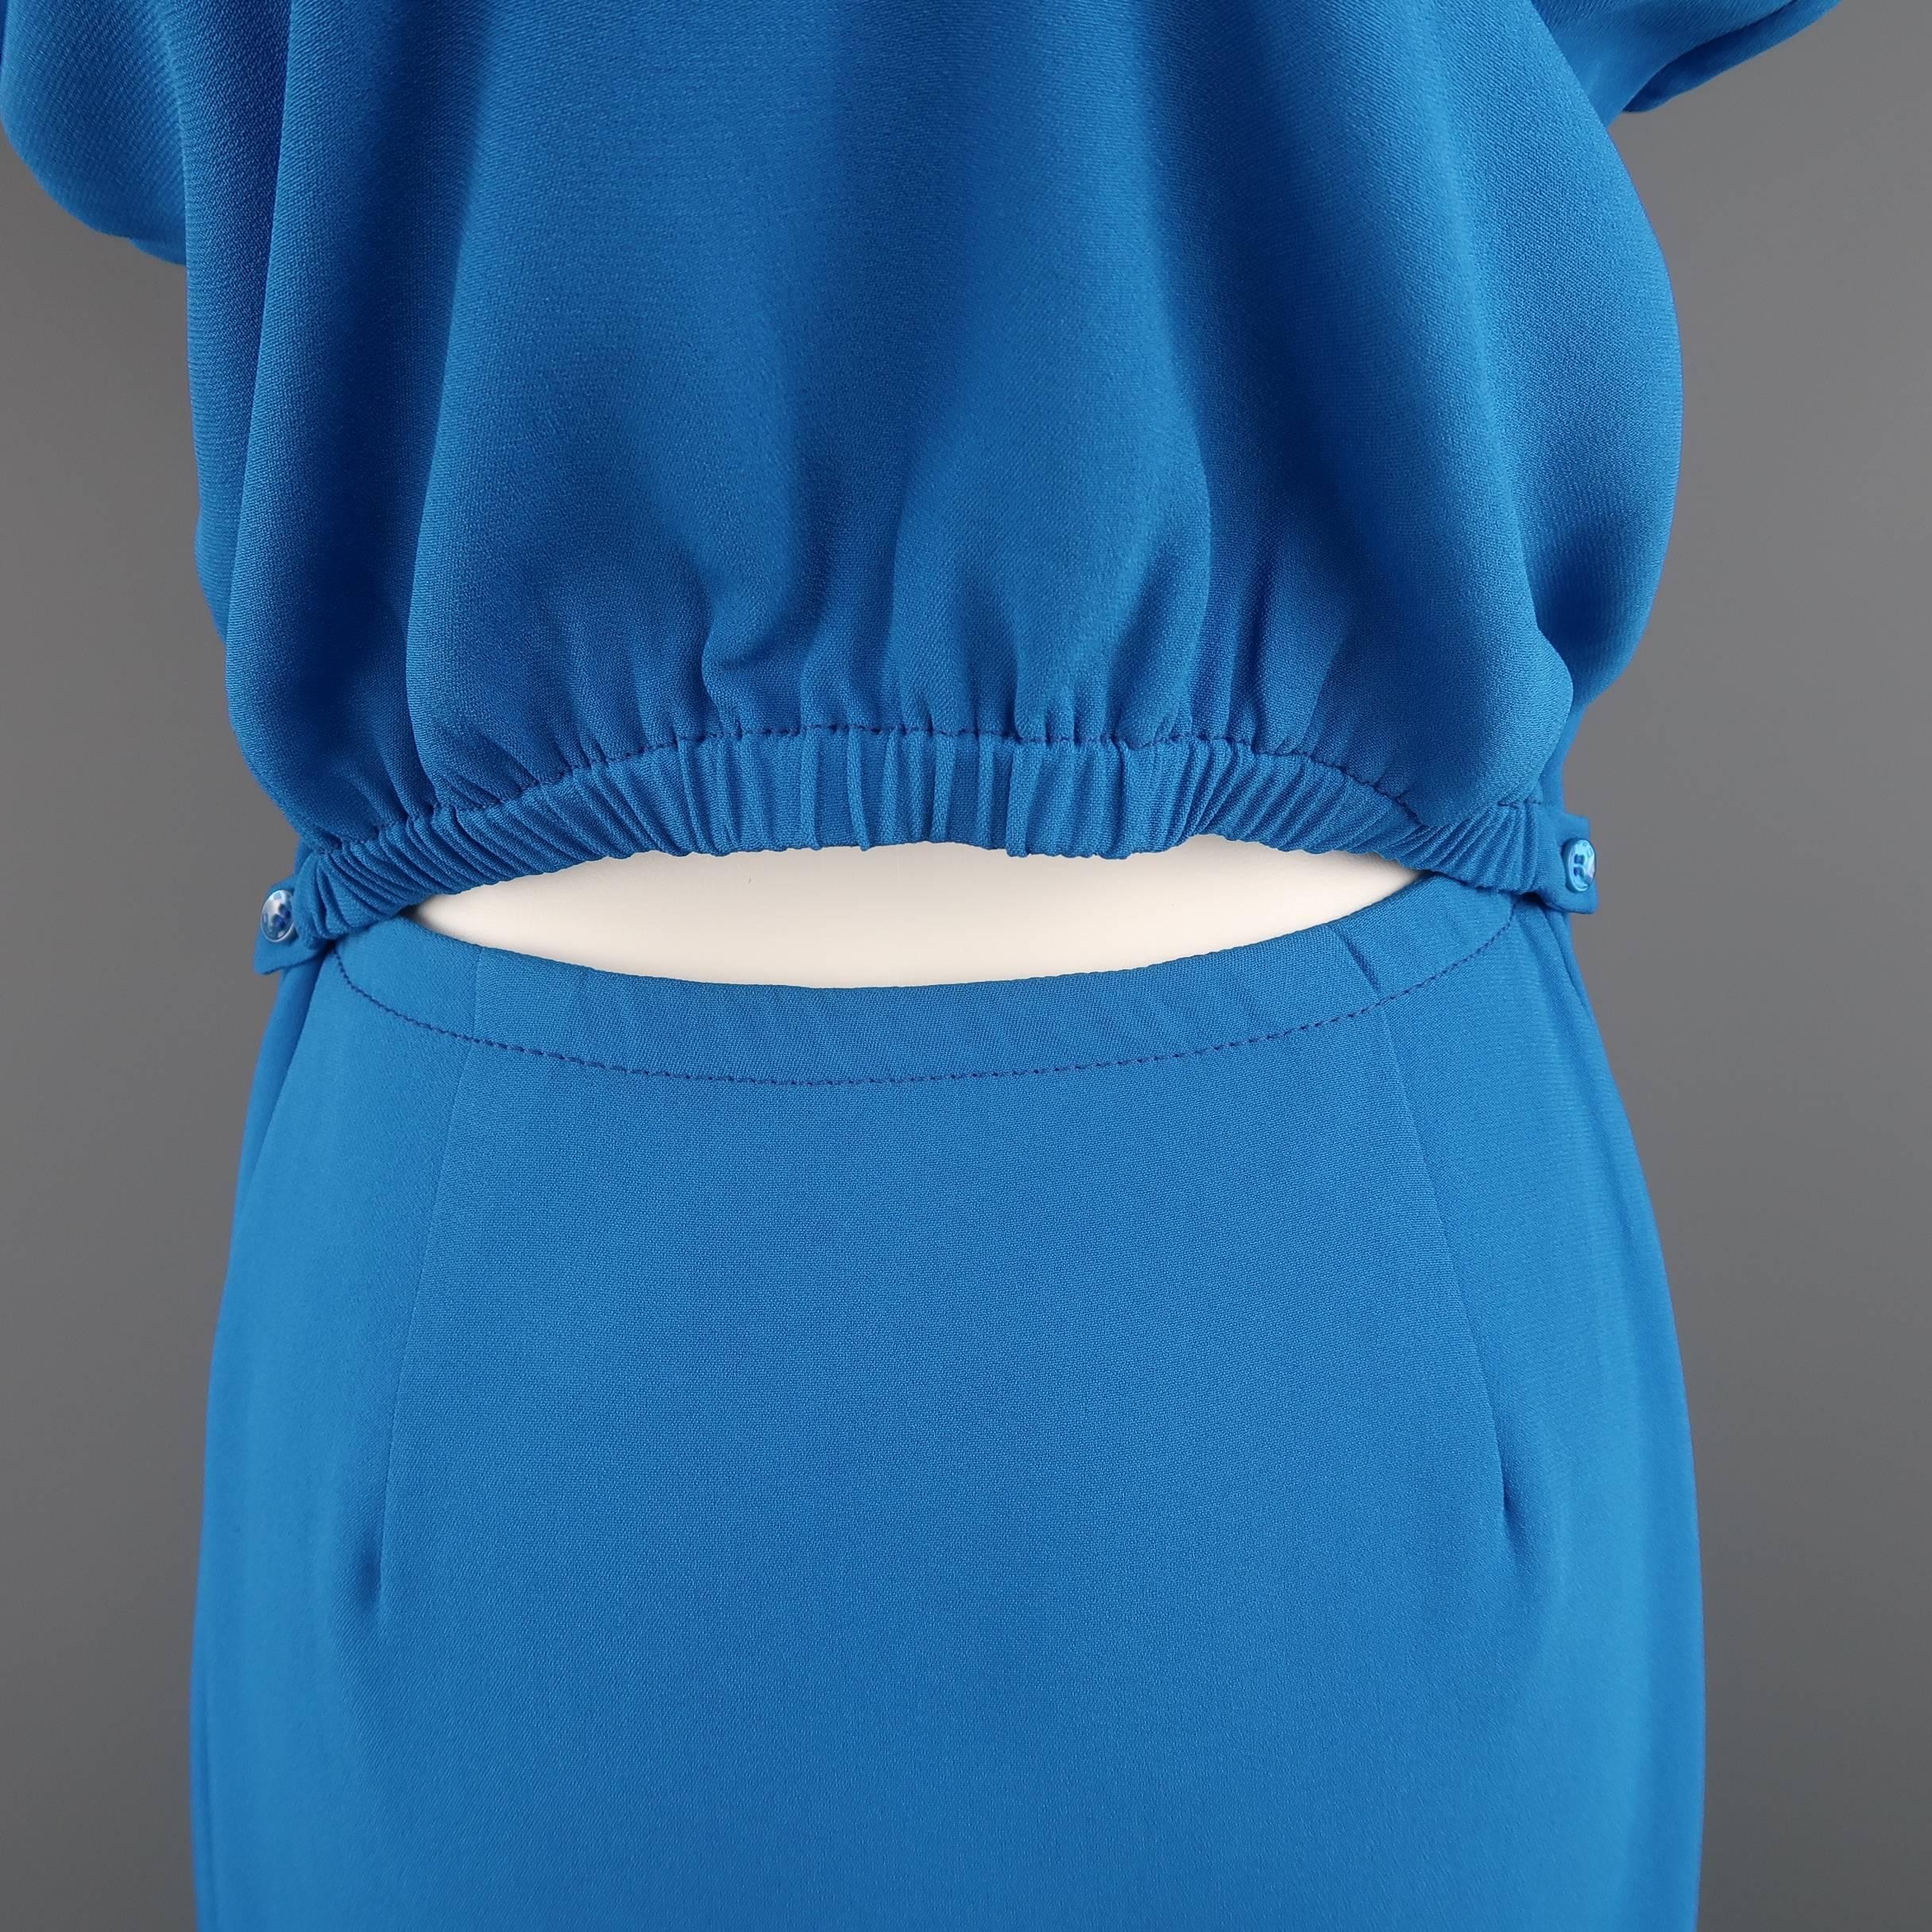 ETRO Dress - Size 4 Aqua Blue SLeeveless Half Button Sash Belt Dress 4